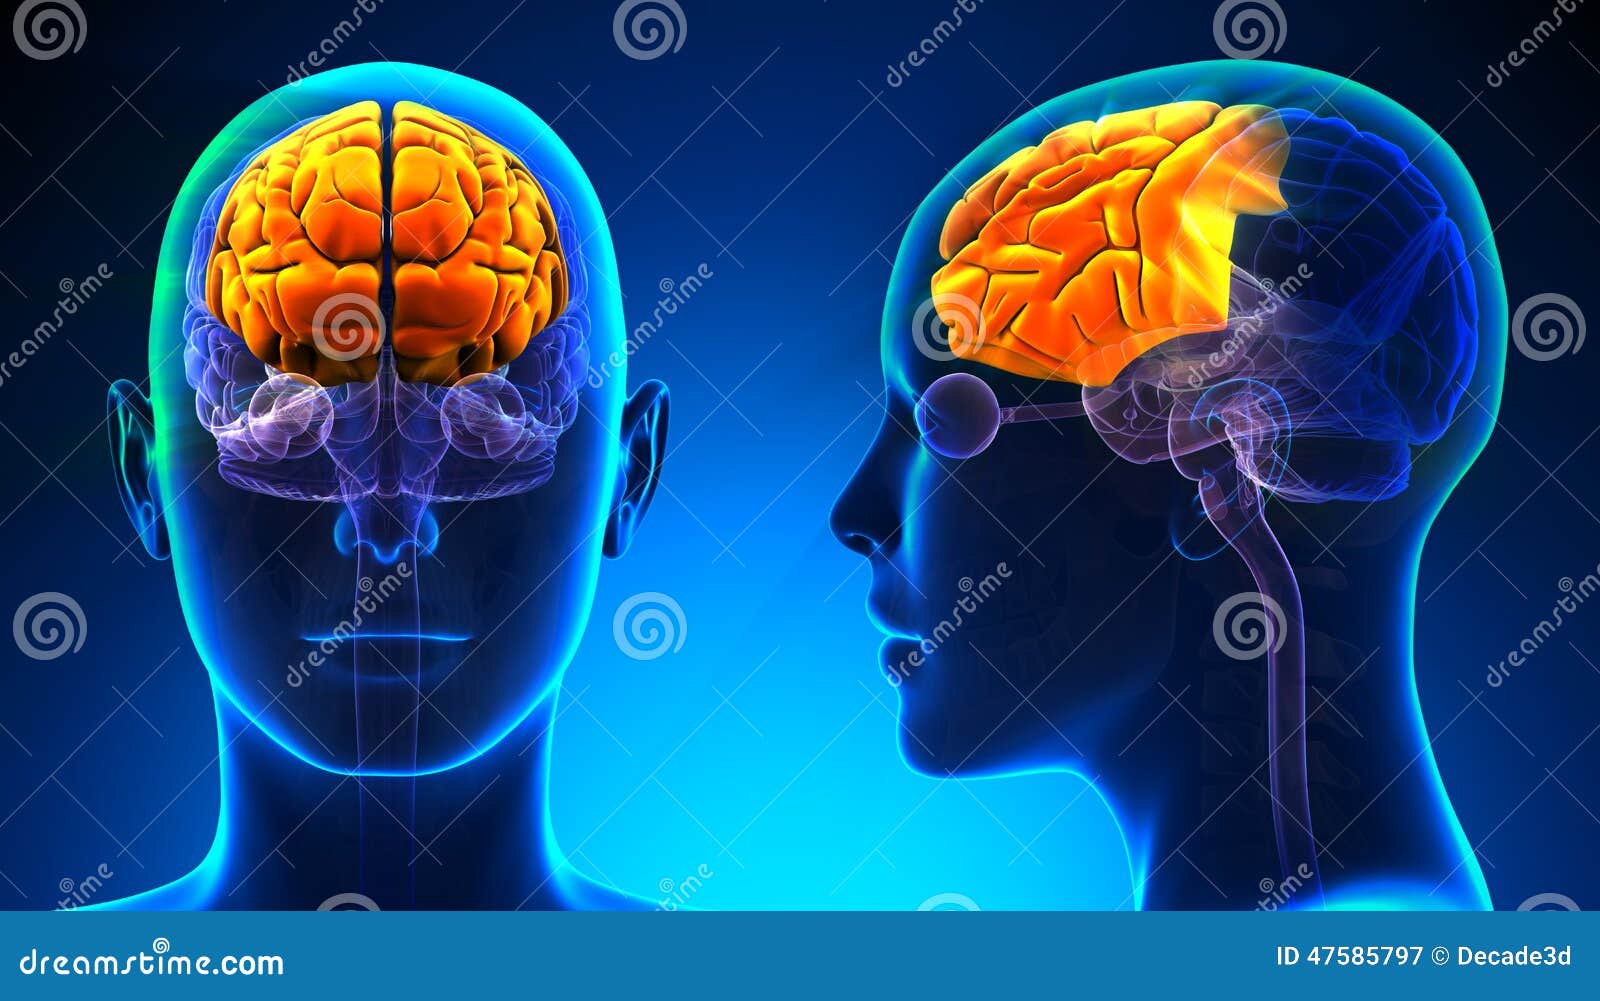 female frontal lobe brain anatomy - blue concept